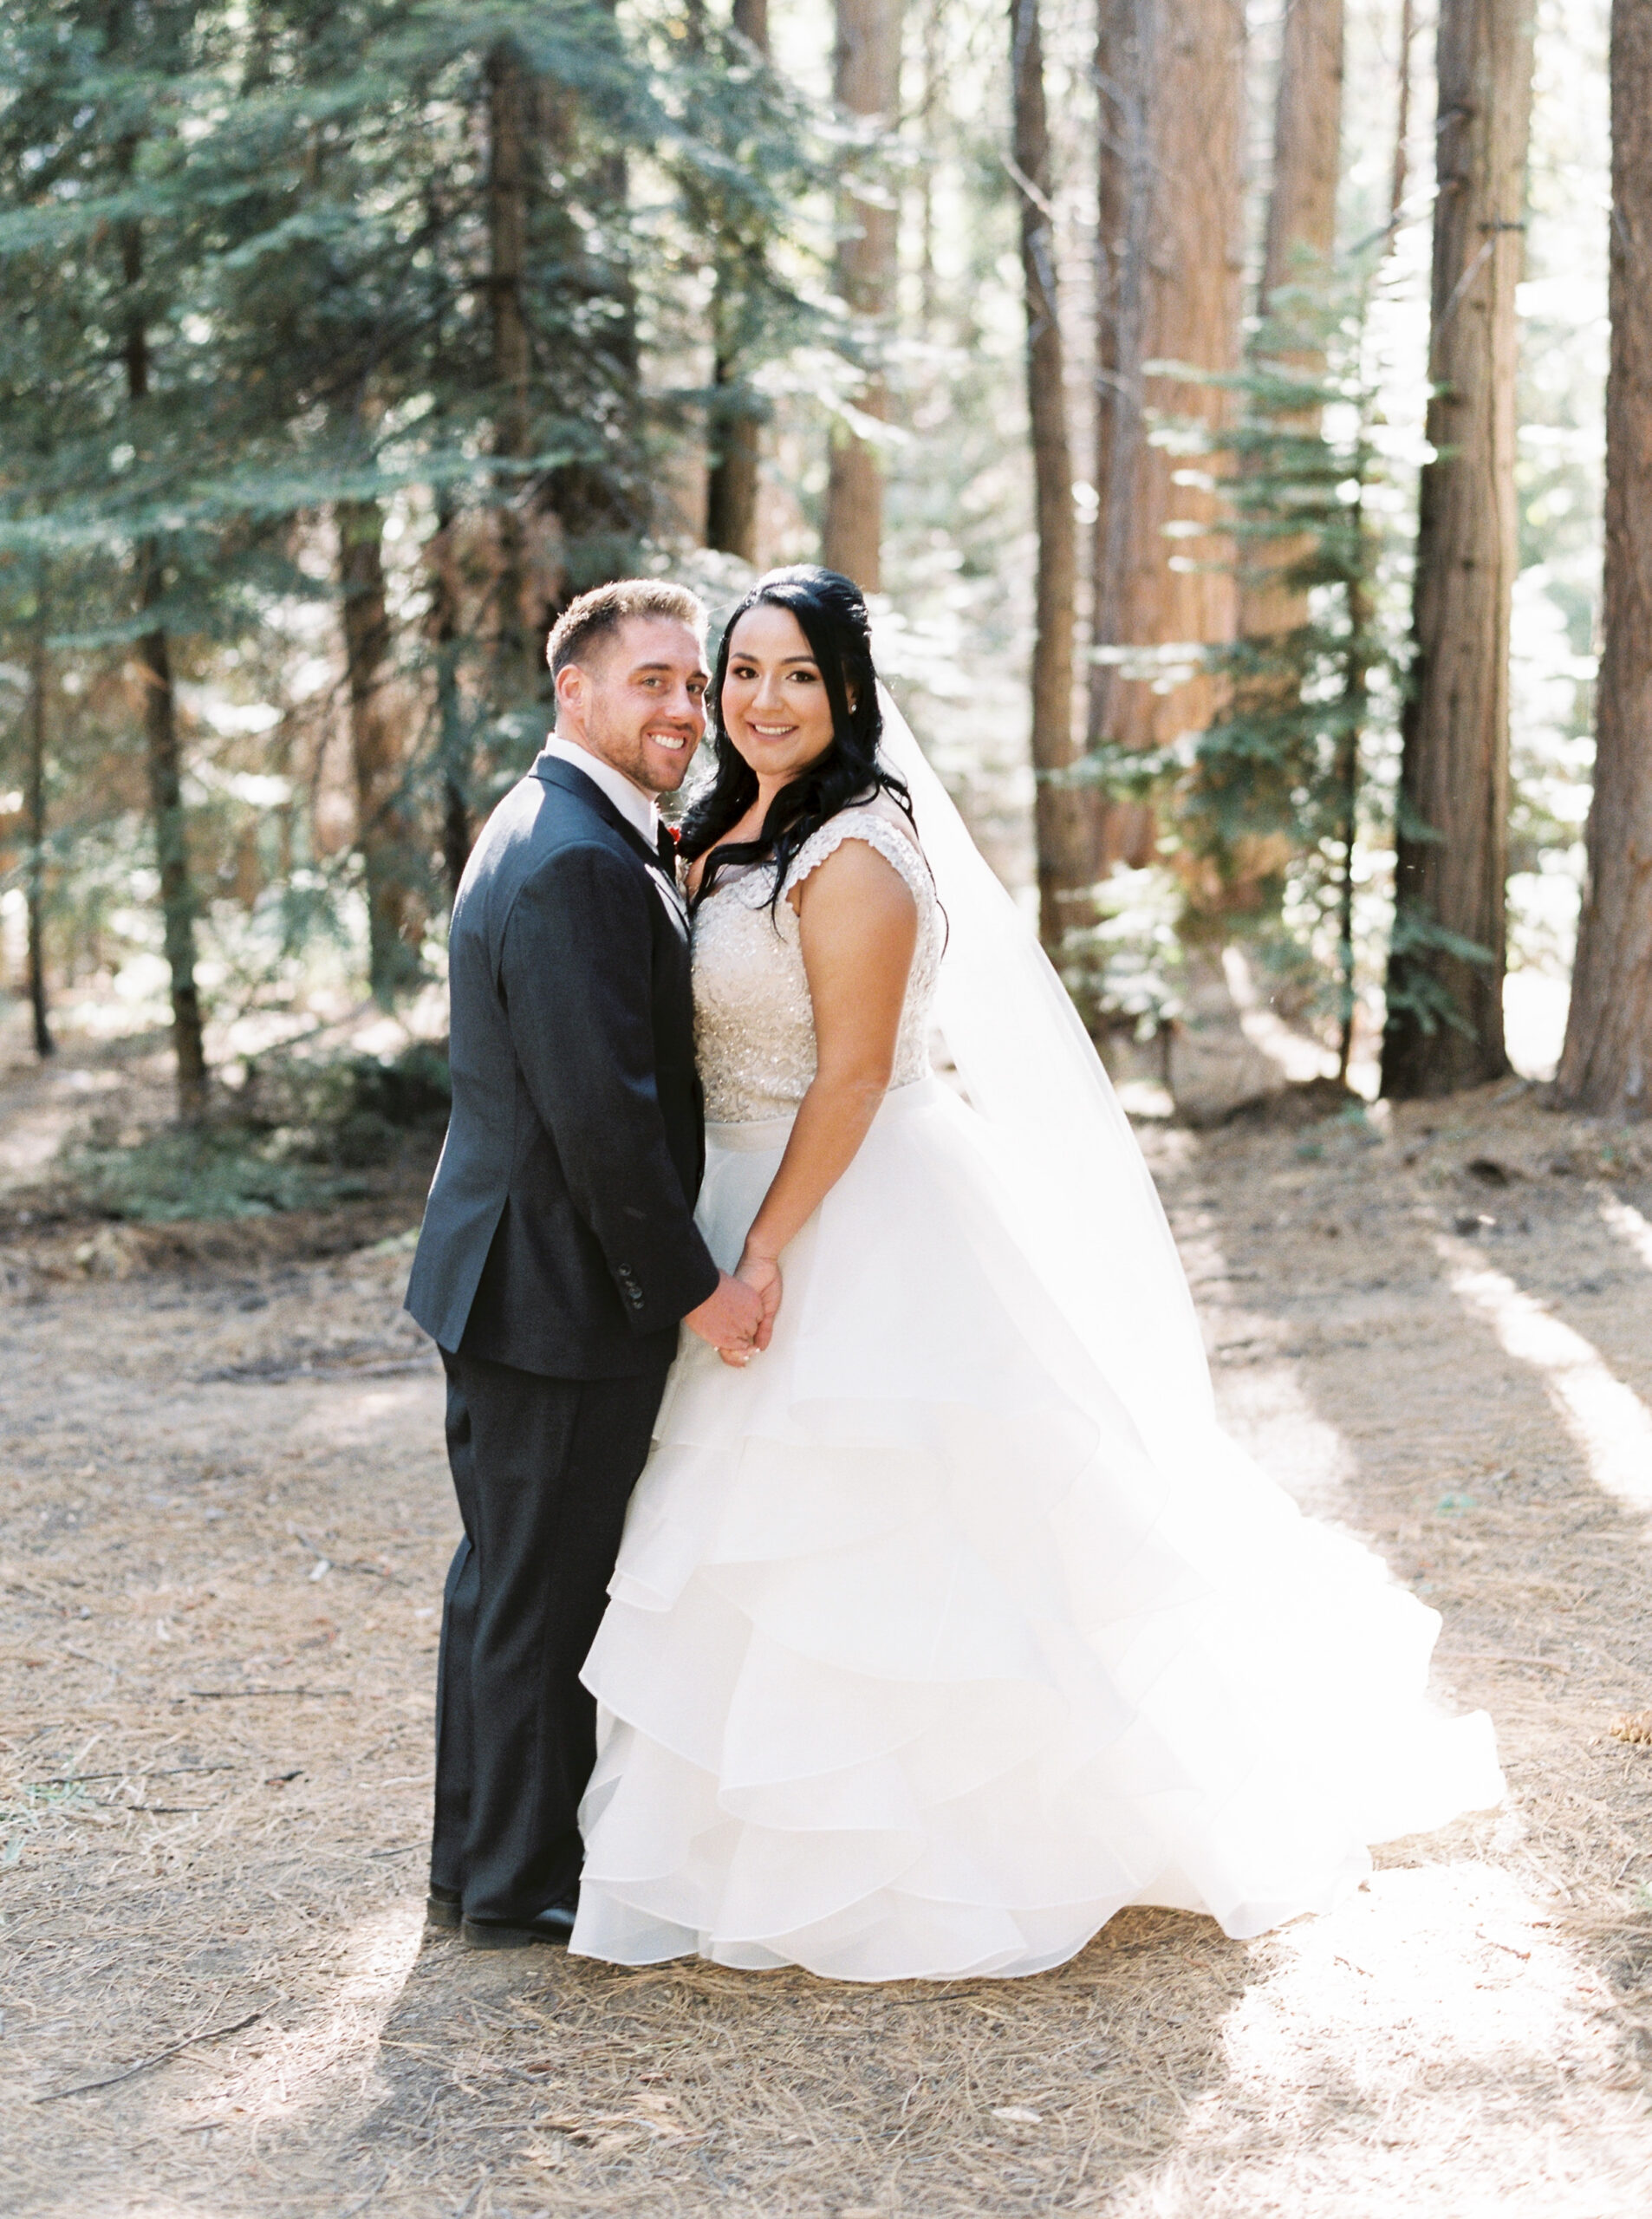 Tenaya-lodge-wedding-at-yosemite-national-park-california-29.jpg